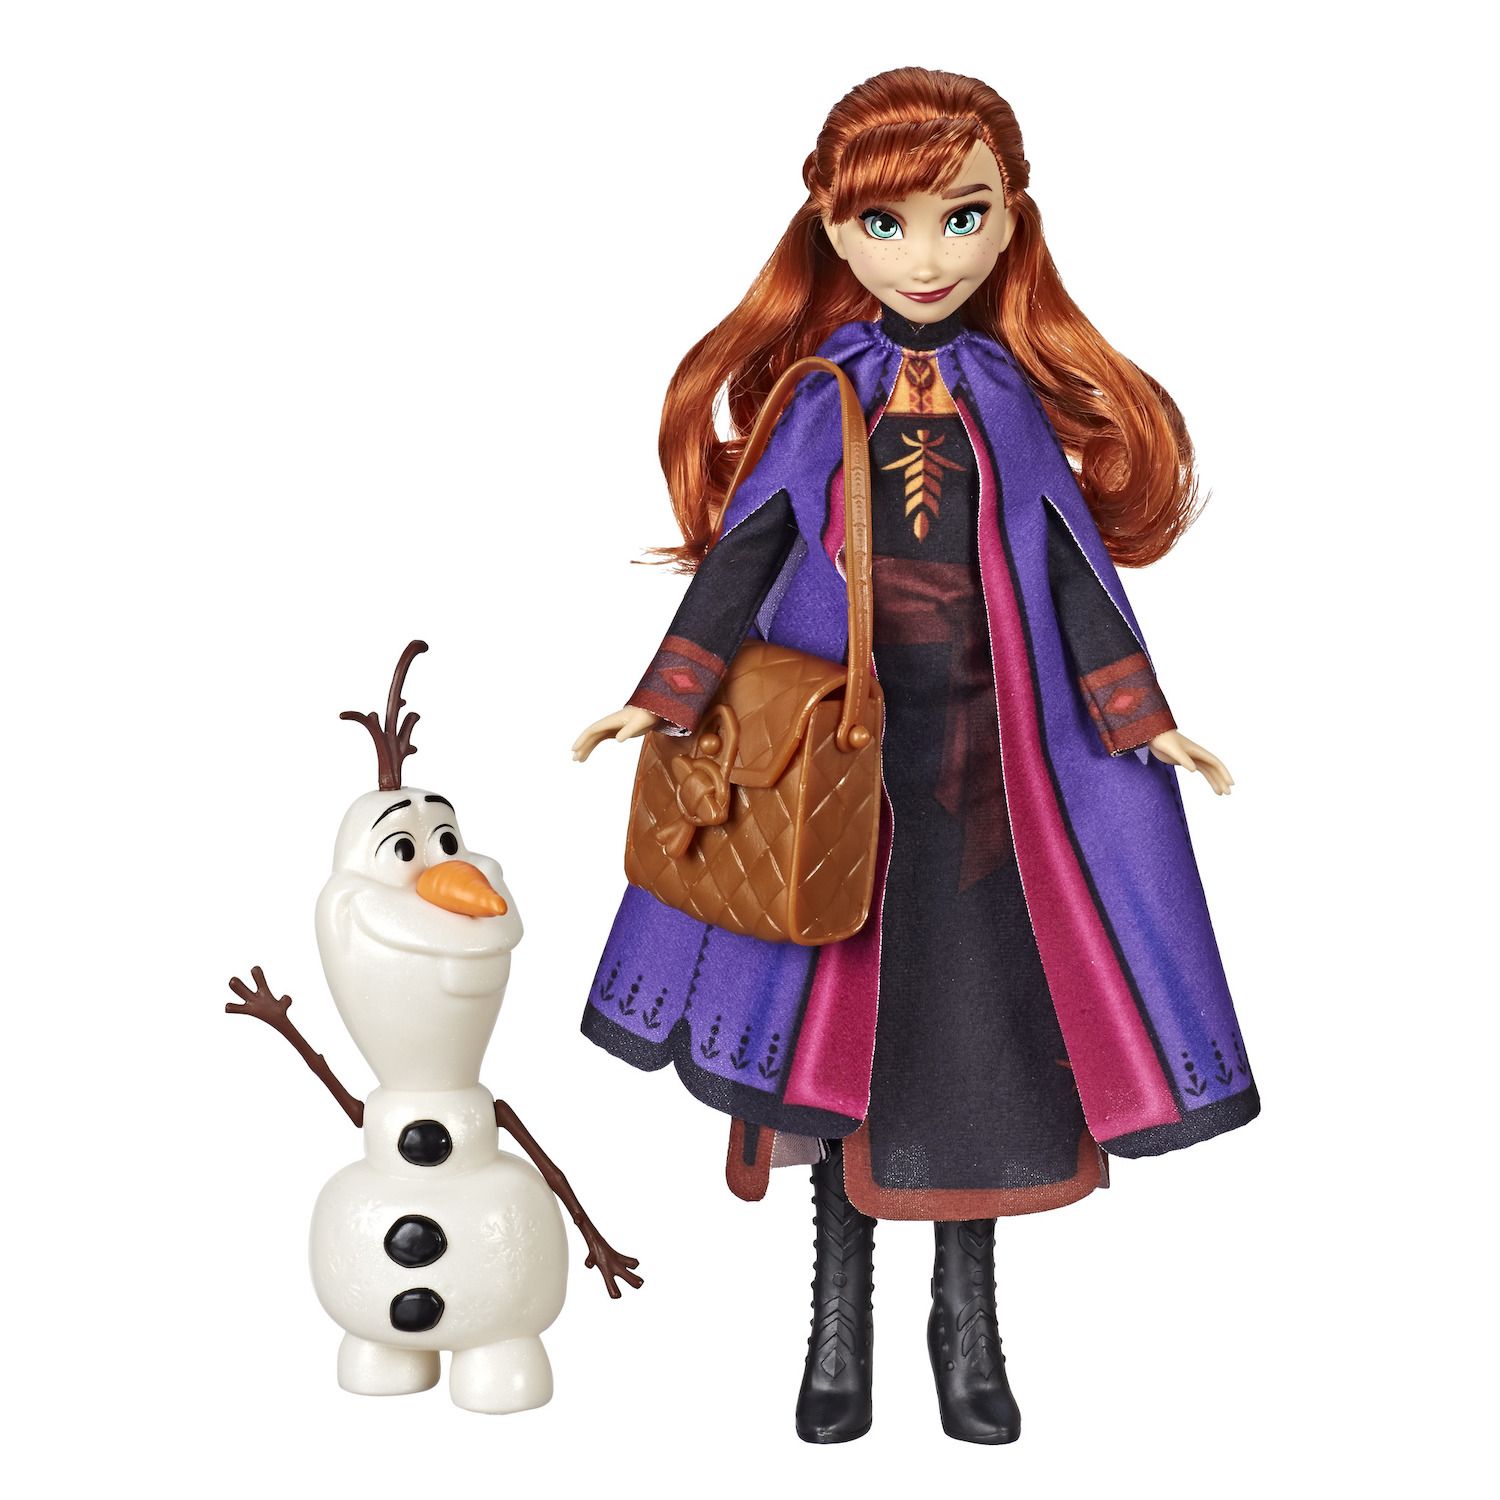 olaf's frozen adventure anna doll